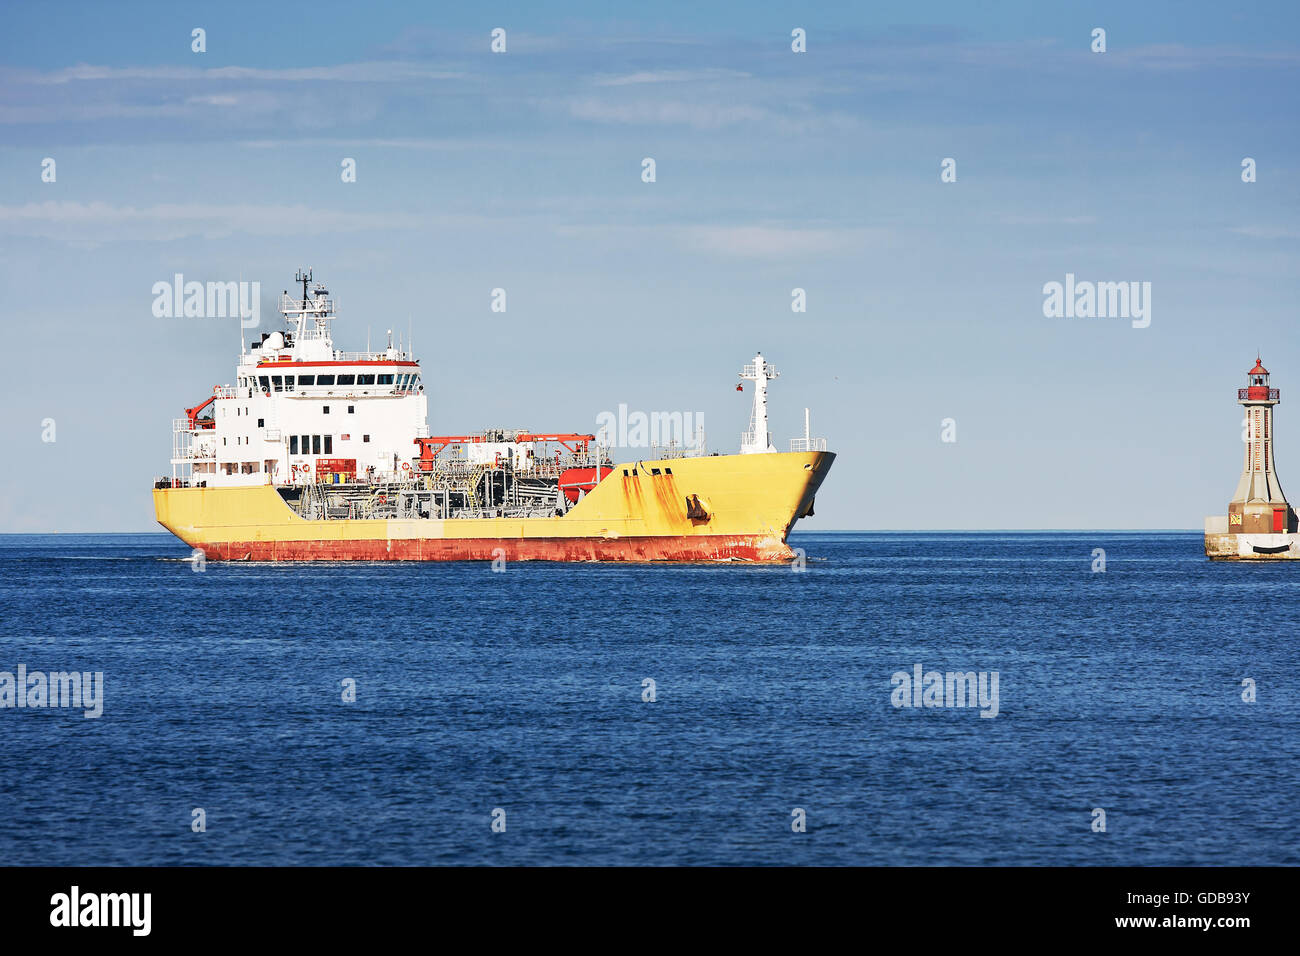 Tanker ship  entering the port Stock Photo